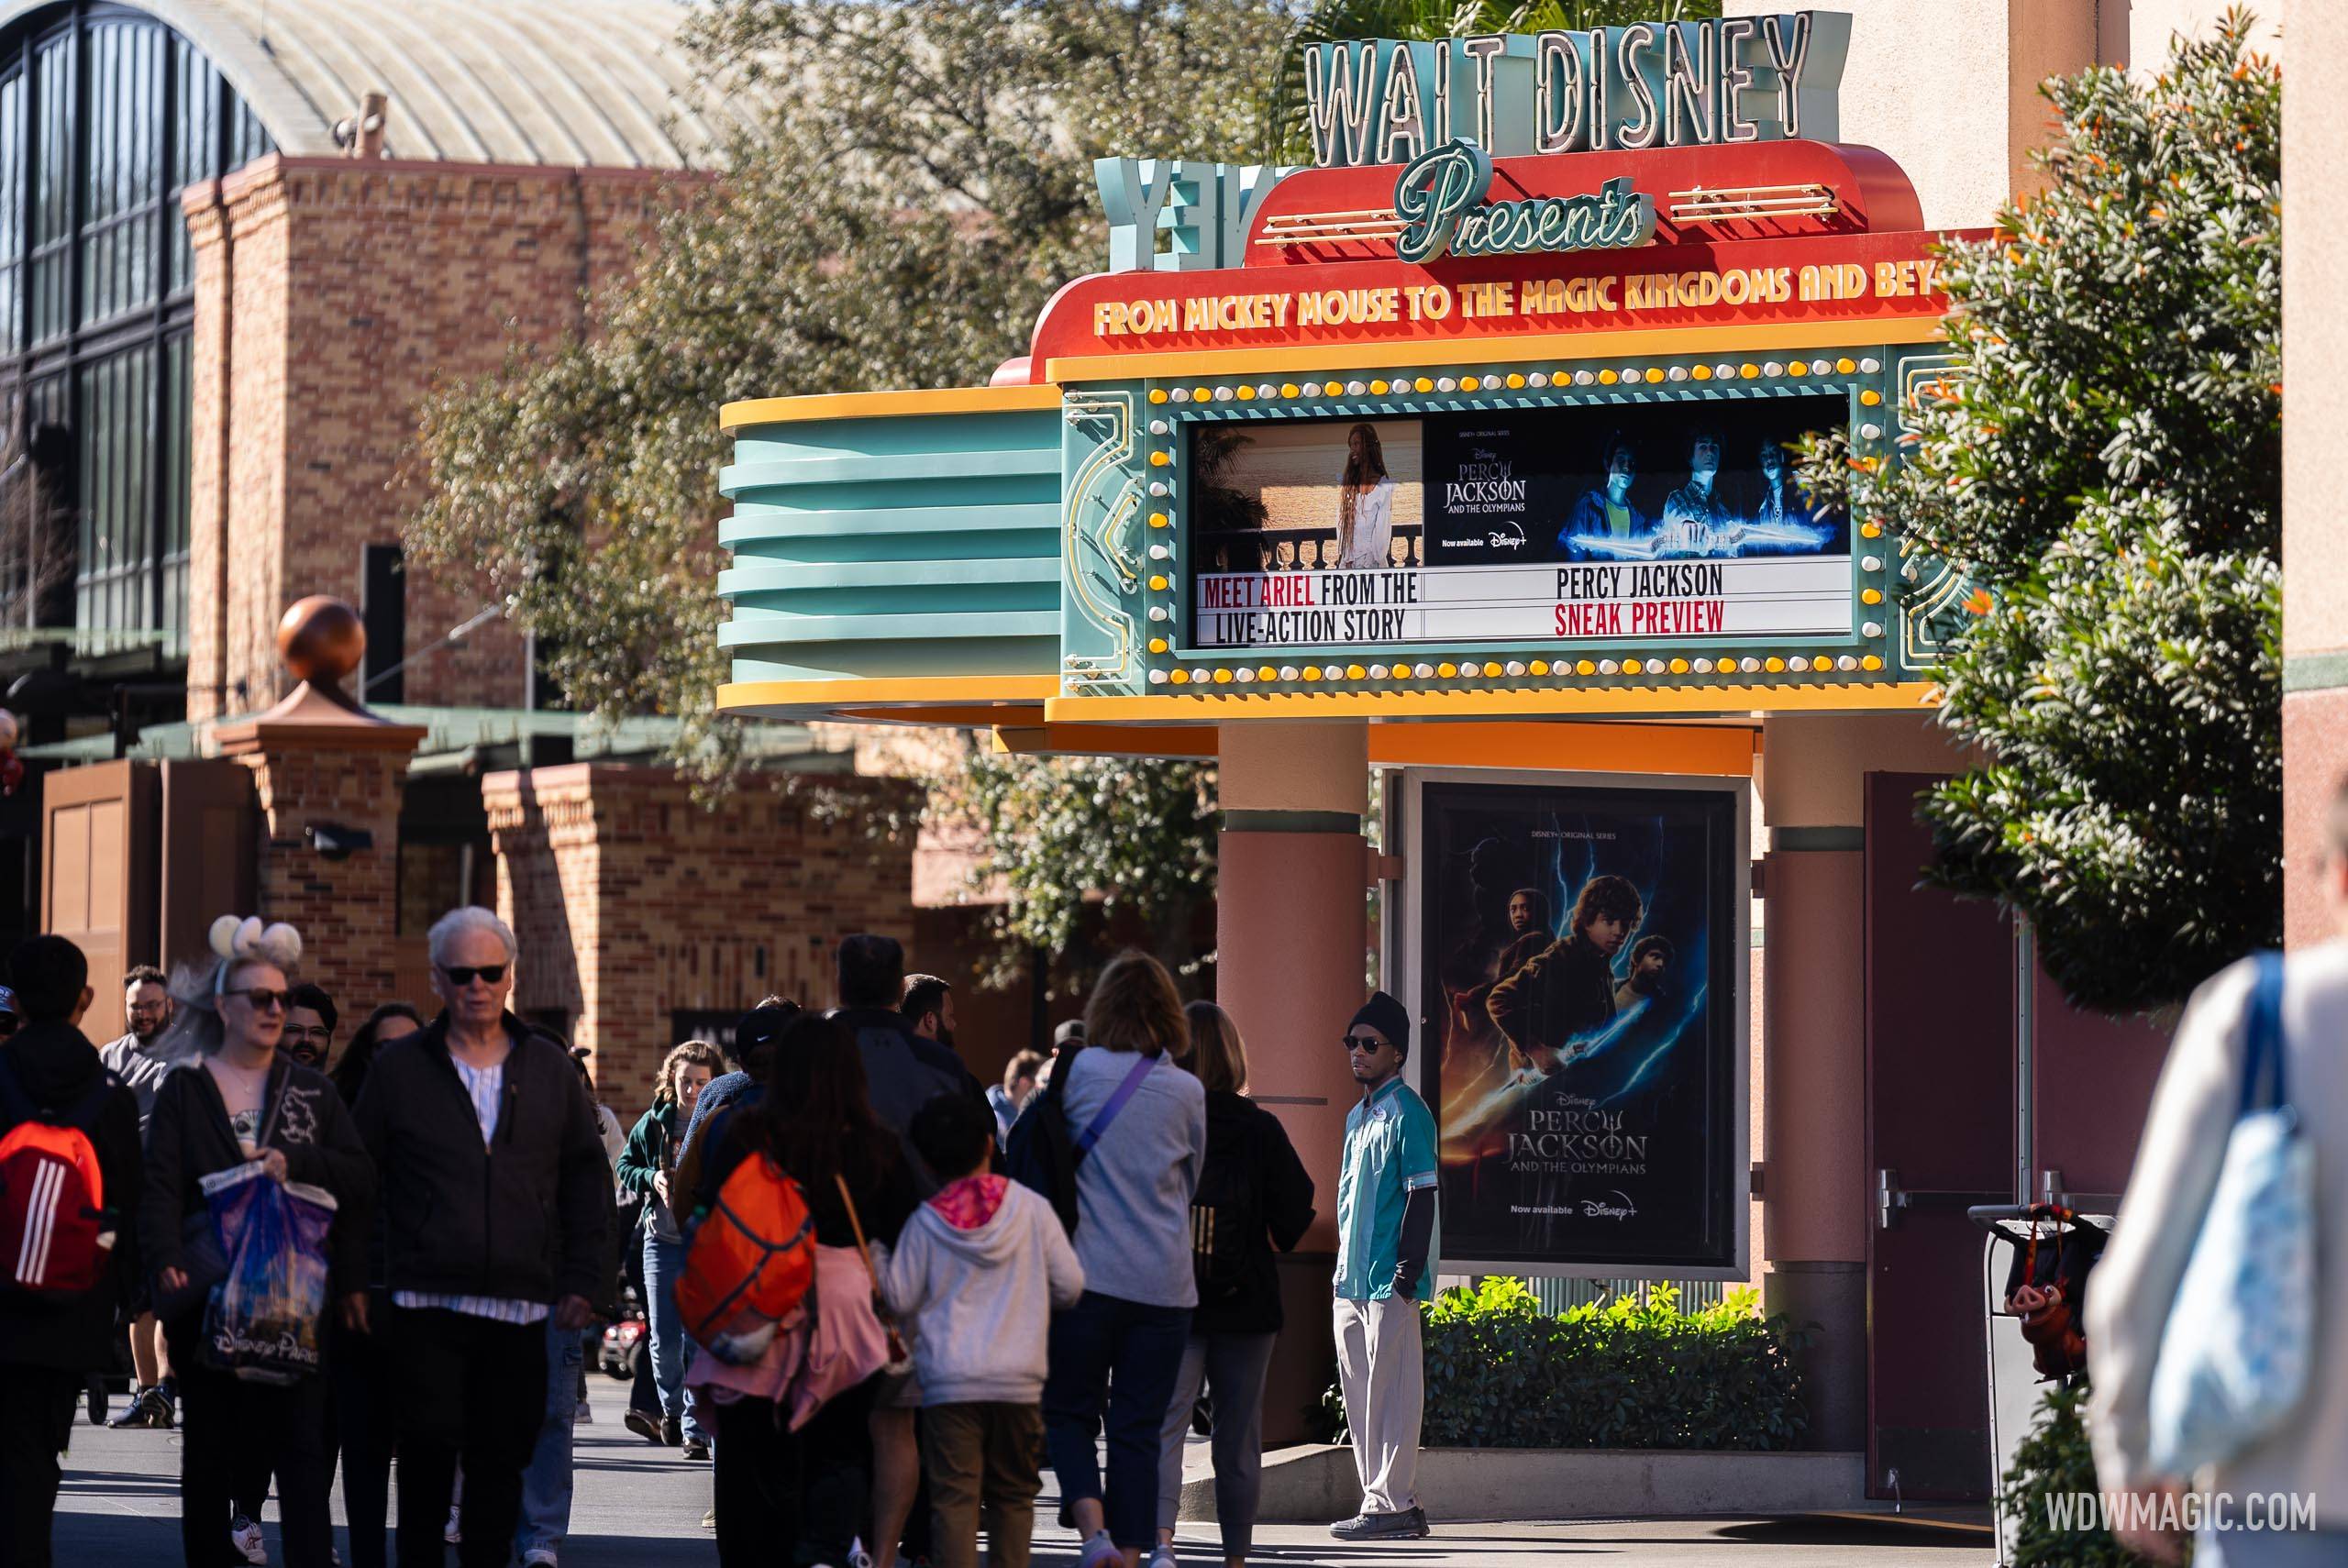 Walt Disney Presents theater now closed for refurbishment at Disney's Hollywood Studios